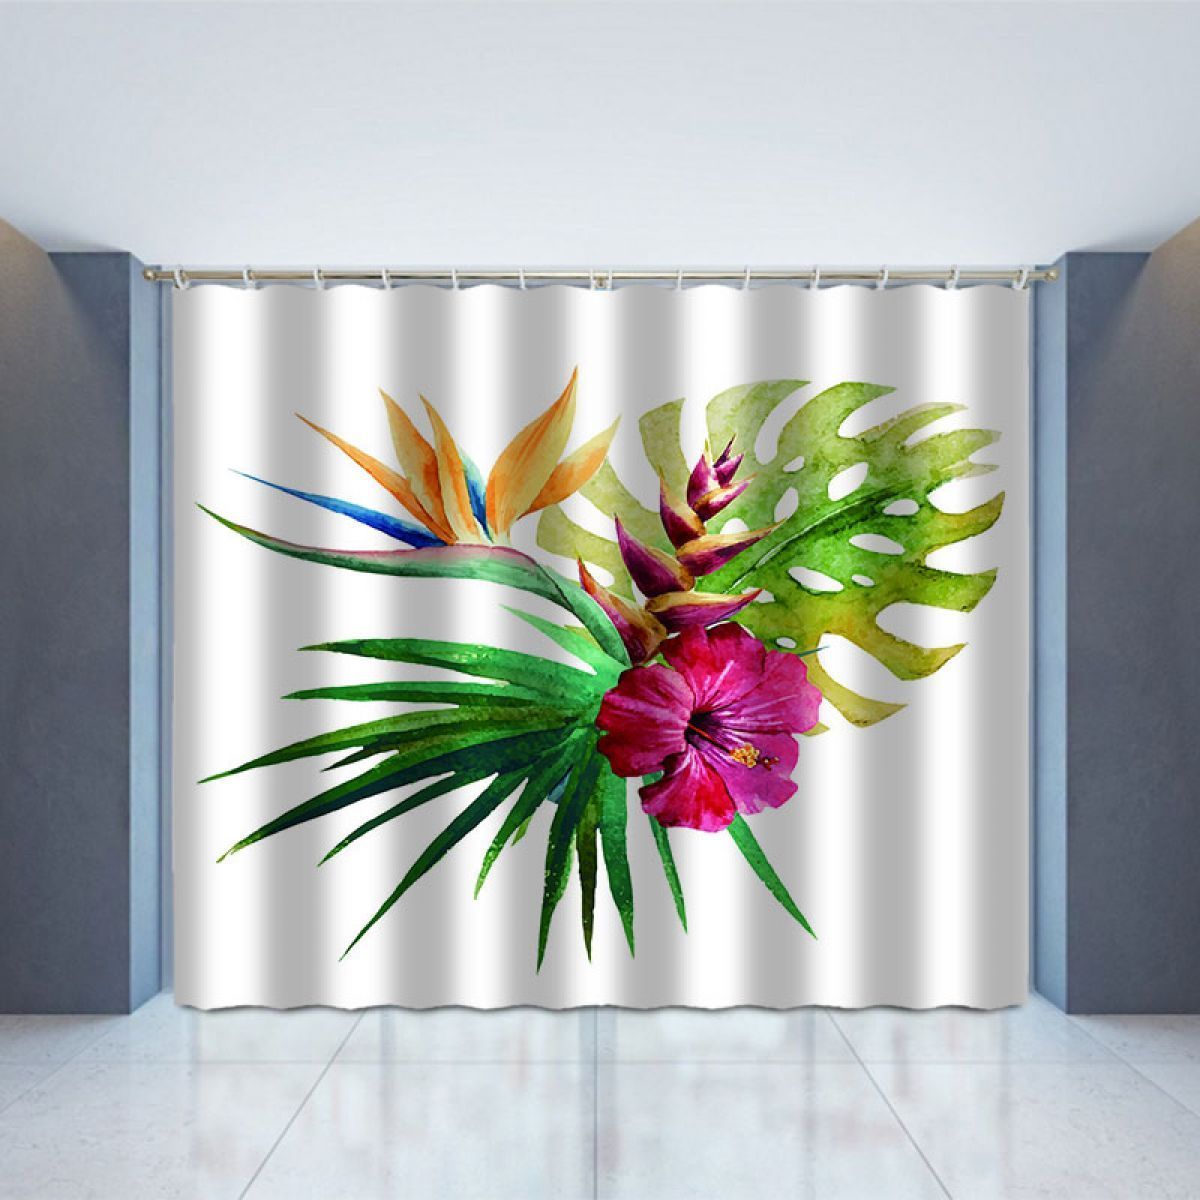 3d Plant Printed Window Curtain Home Decor